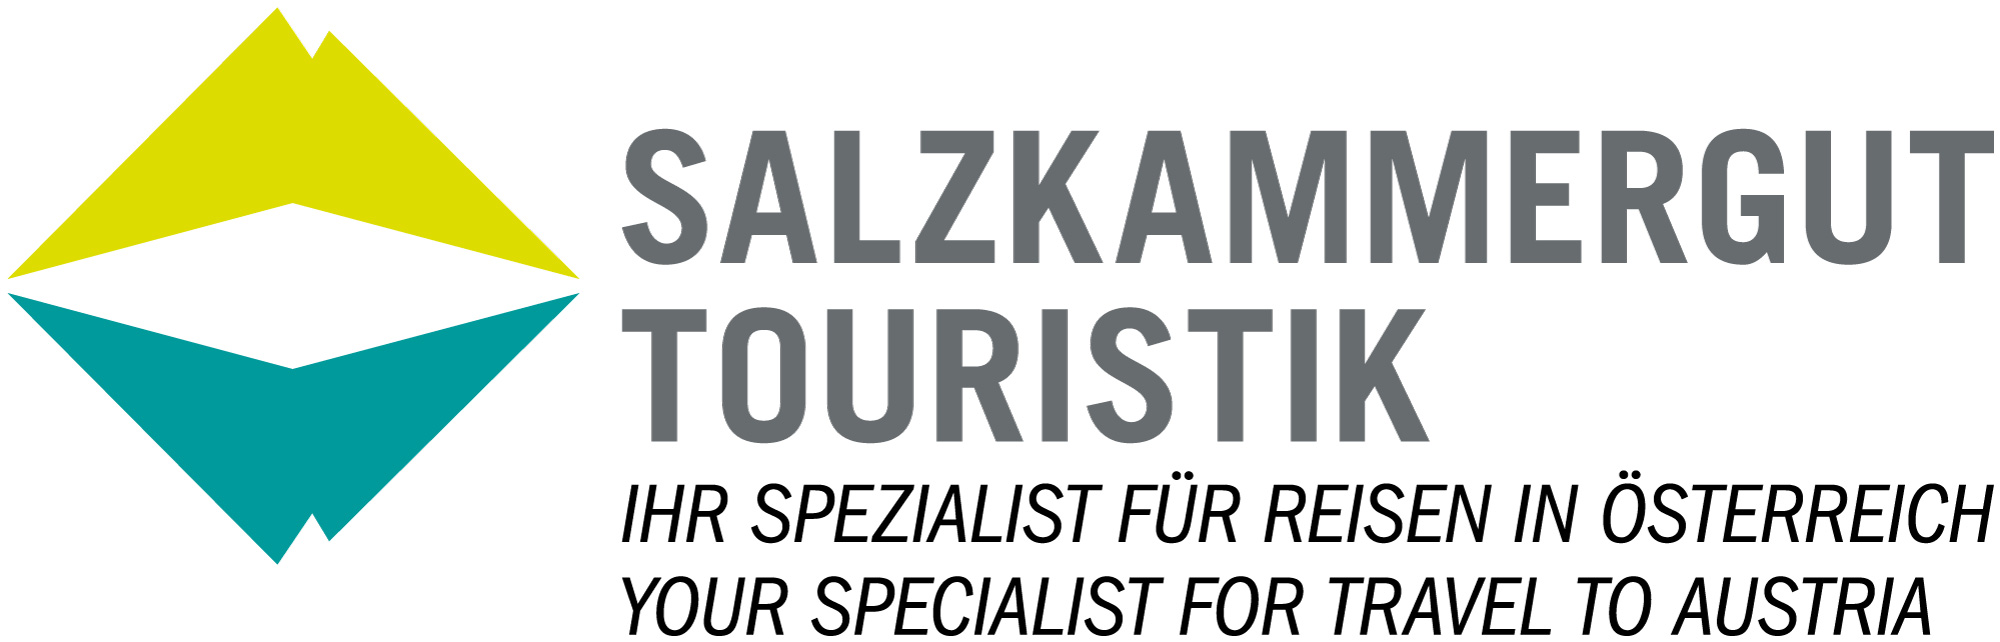 Salzkammergut Touristik GmbH Shop